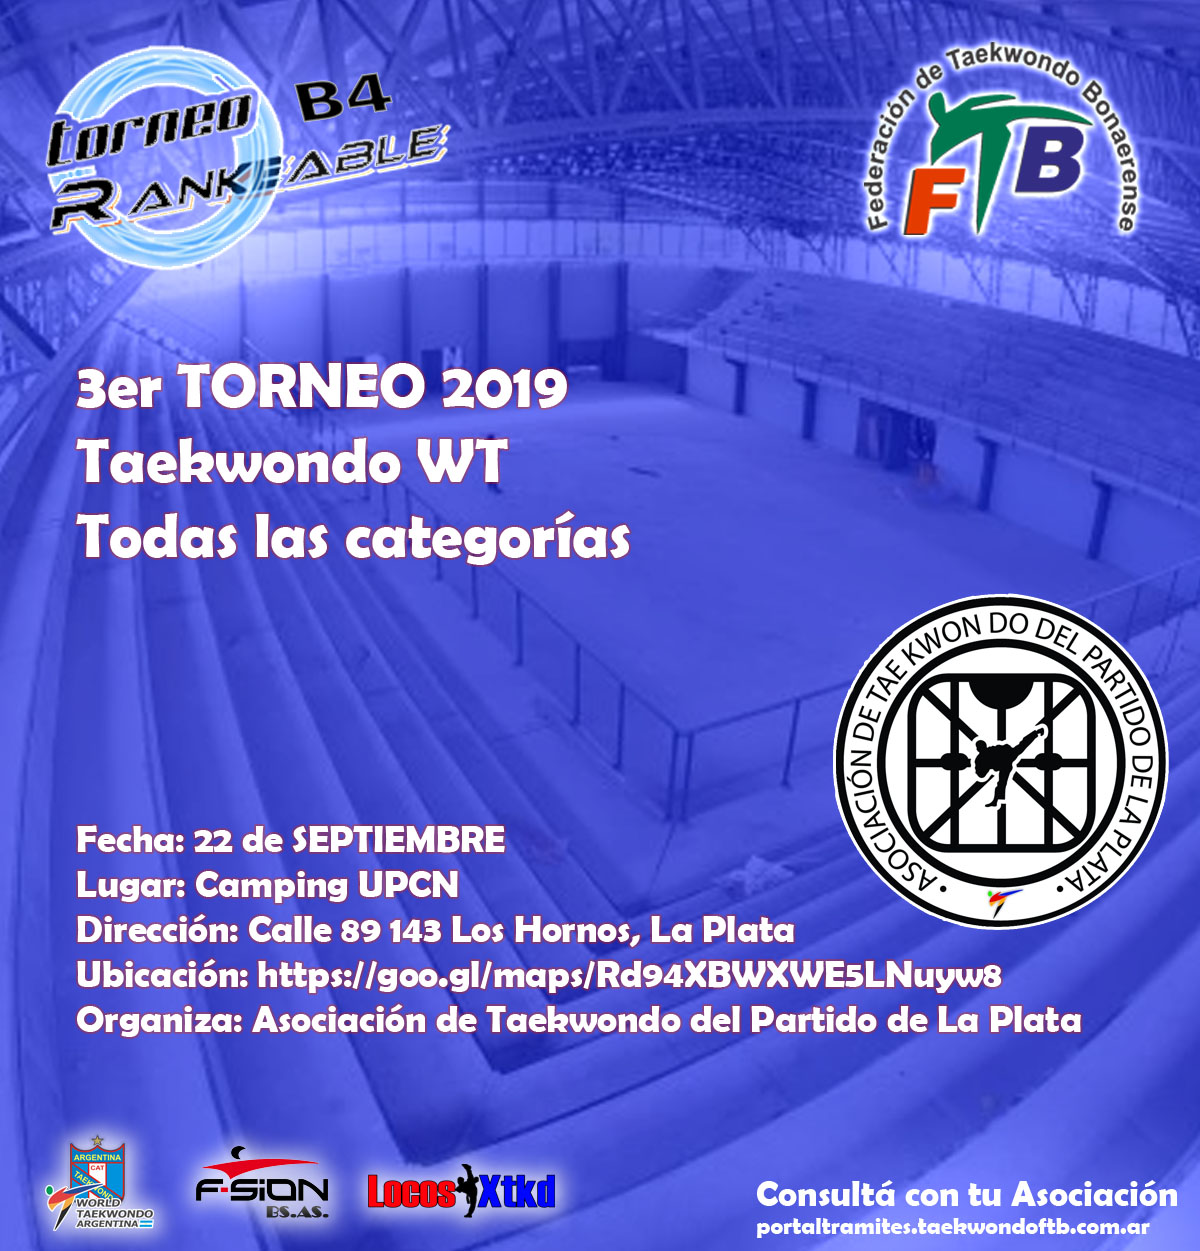 3er Torneo FTB B4 2019